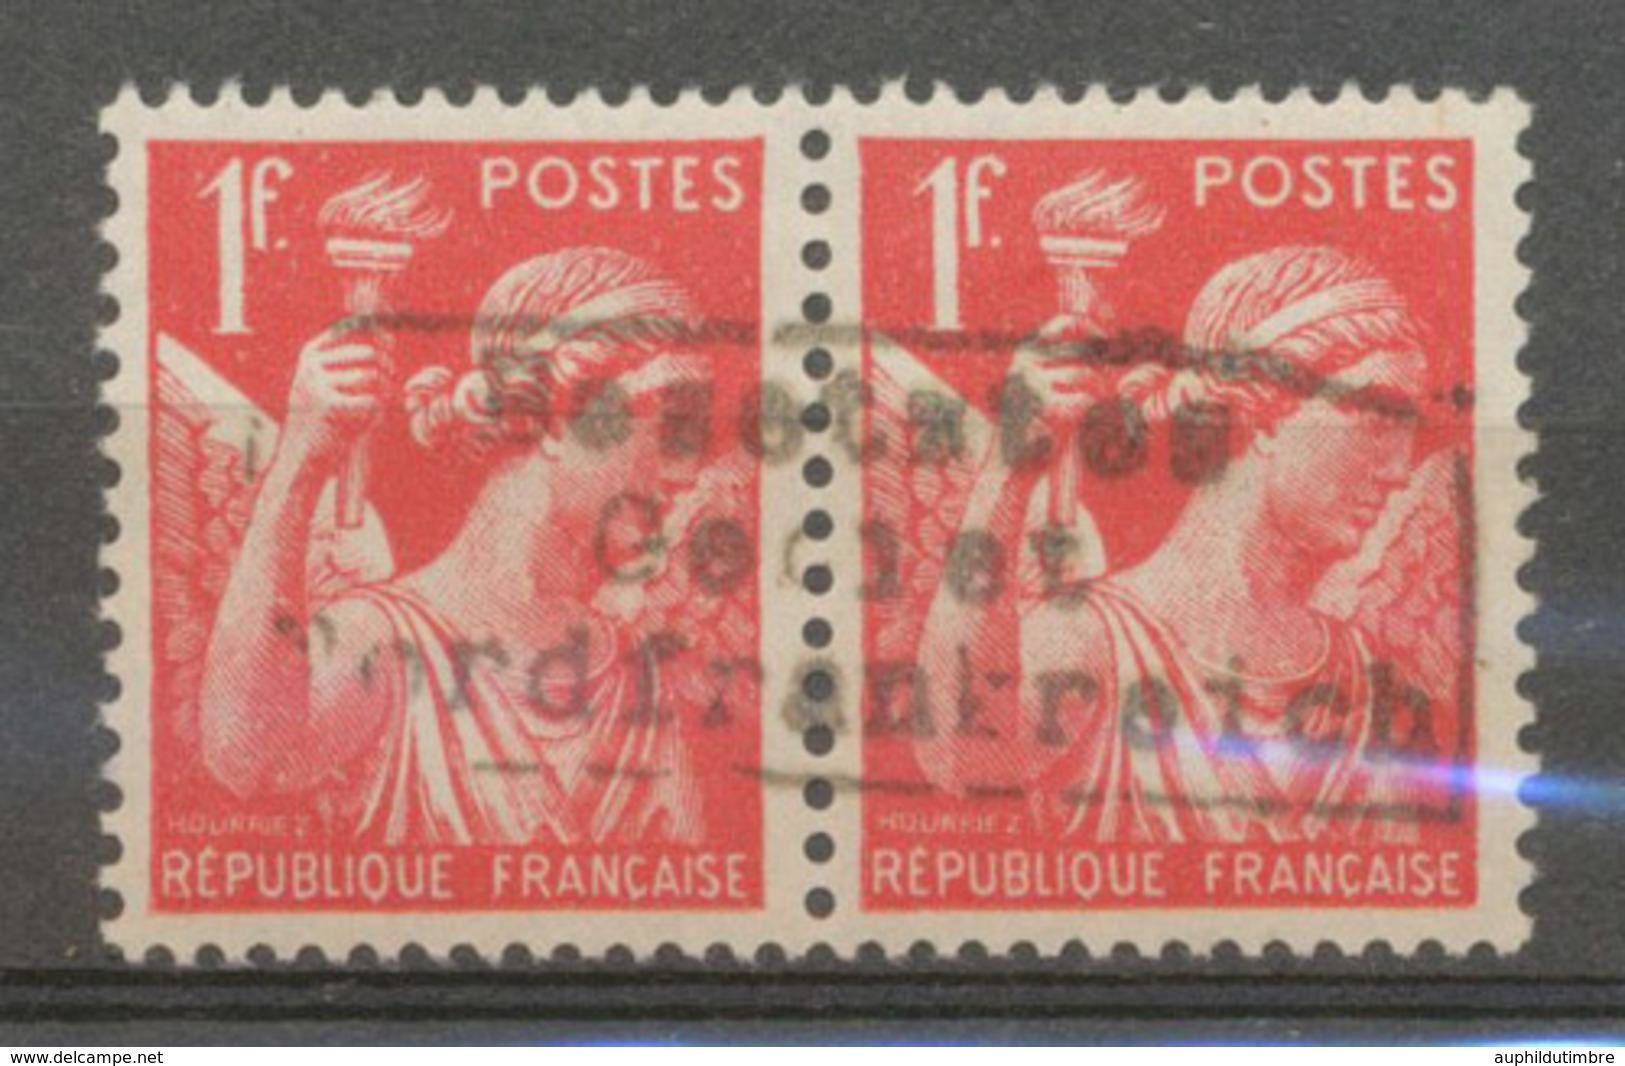 Guerre Paire DUNKERQUE Sur 1 F. Iris Rouge, Superbe, Neuf *. X4551 - Francobolli Di Guerra